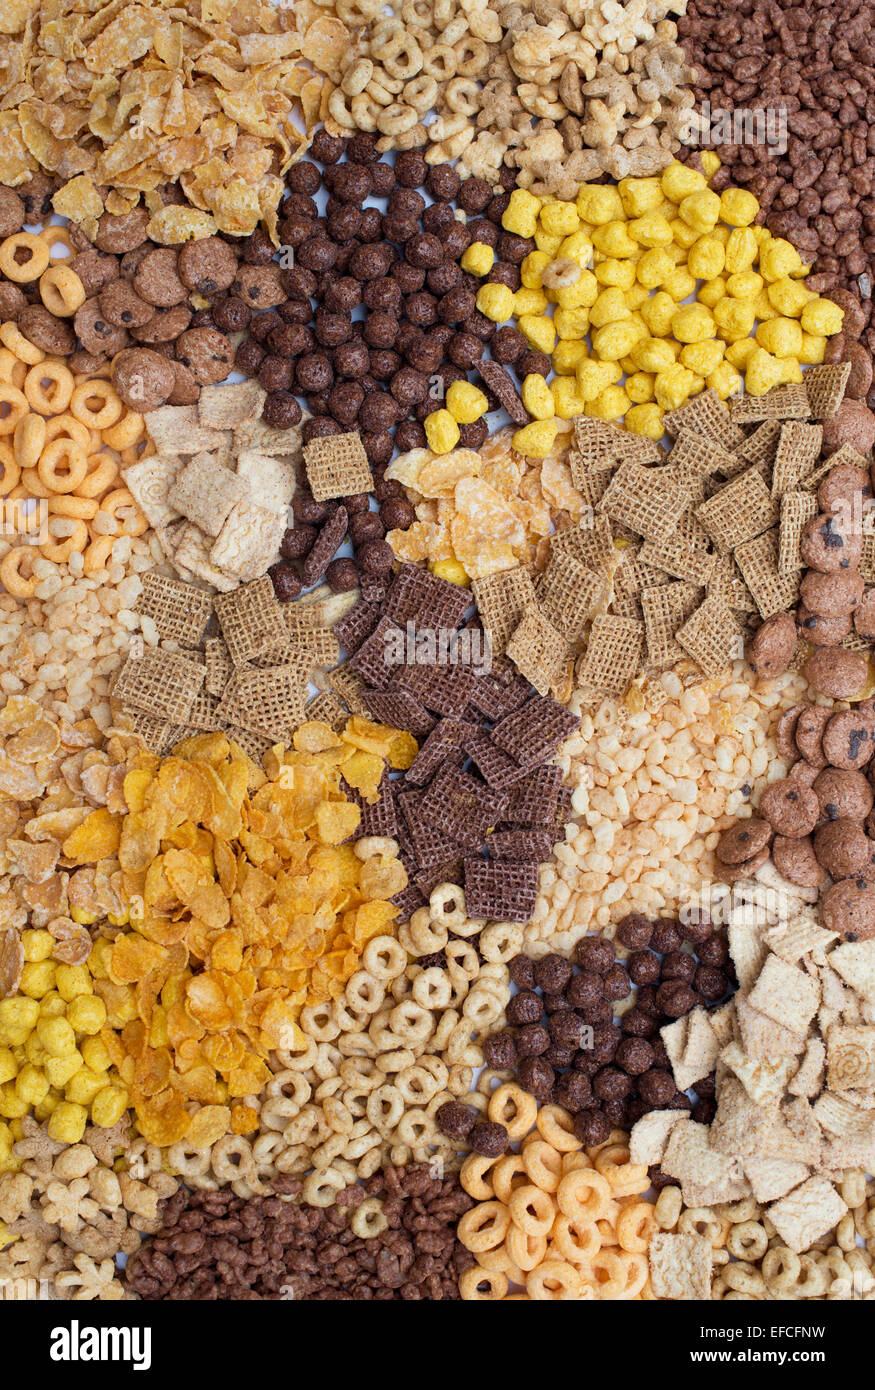 Assorted childrens breakfast cereals Stock Photo